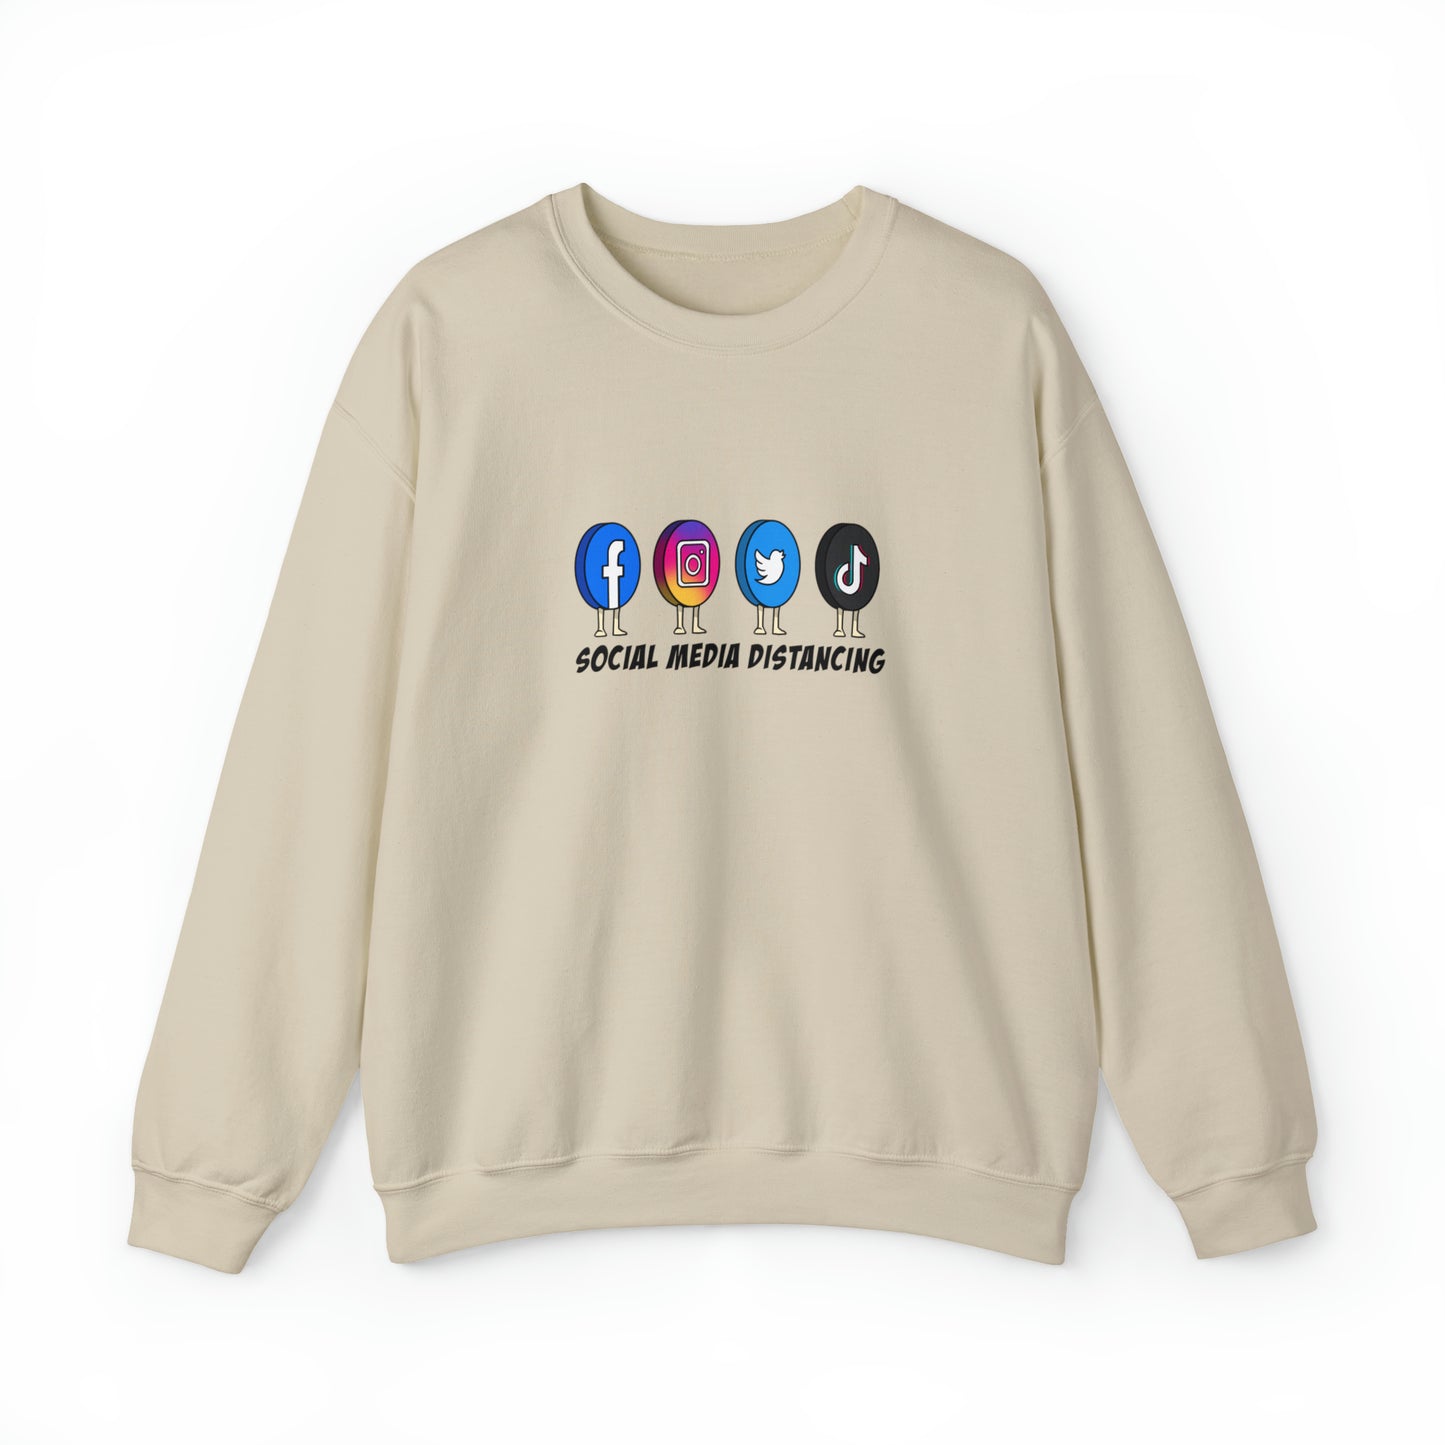 Custom Parody Crewneck Sweatshirt, Social Media Distancing Design